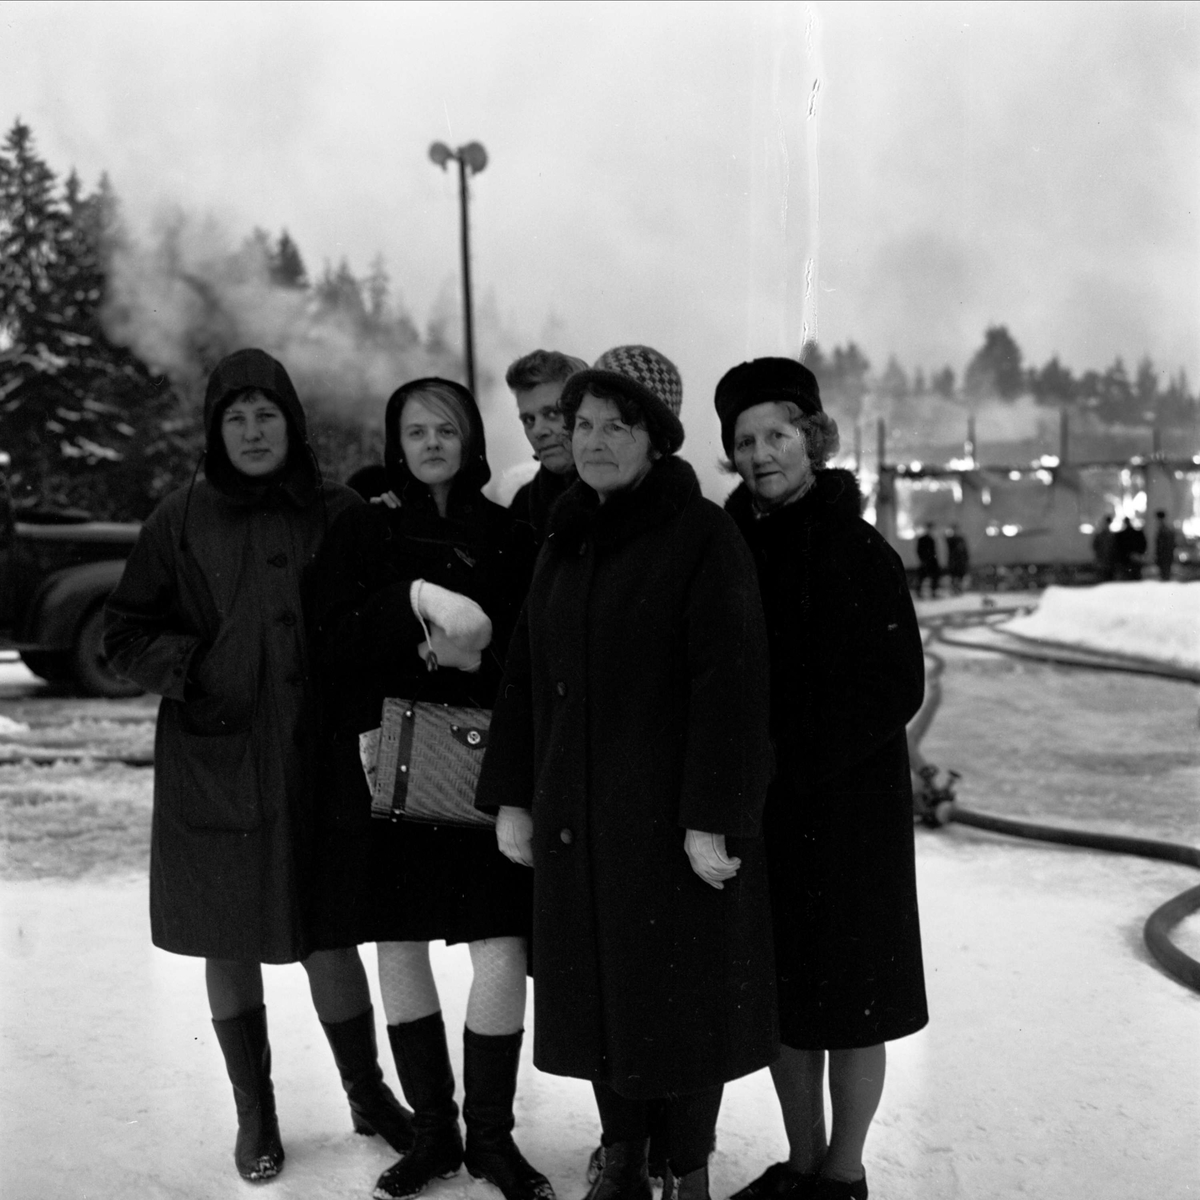 Industribrand i Tobo, Uppland, januari 1968